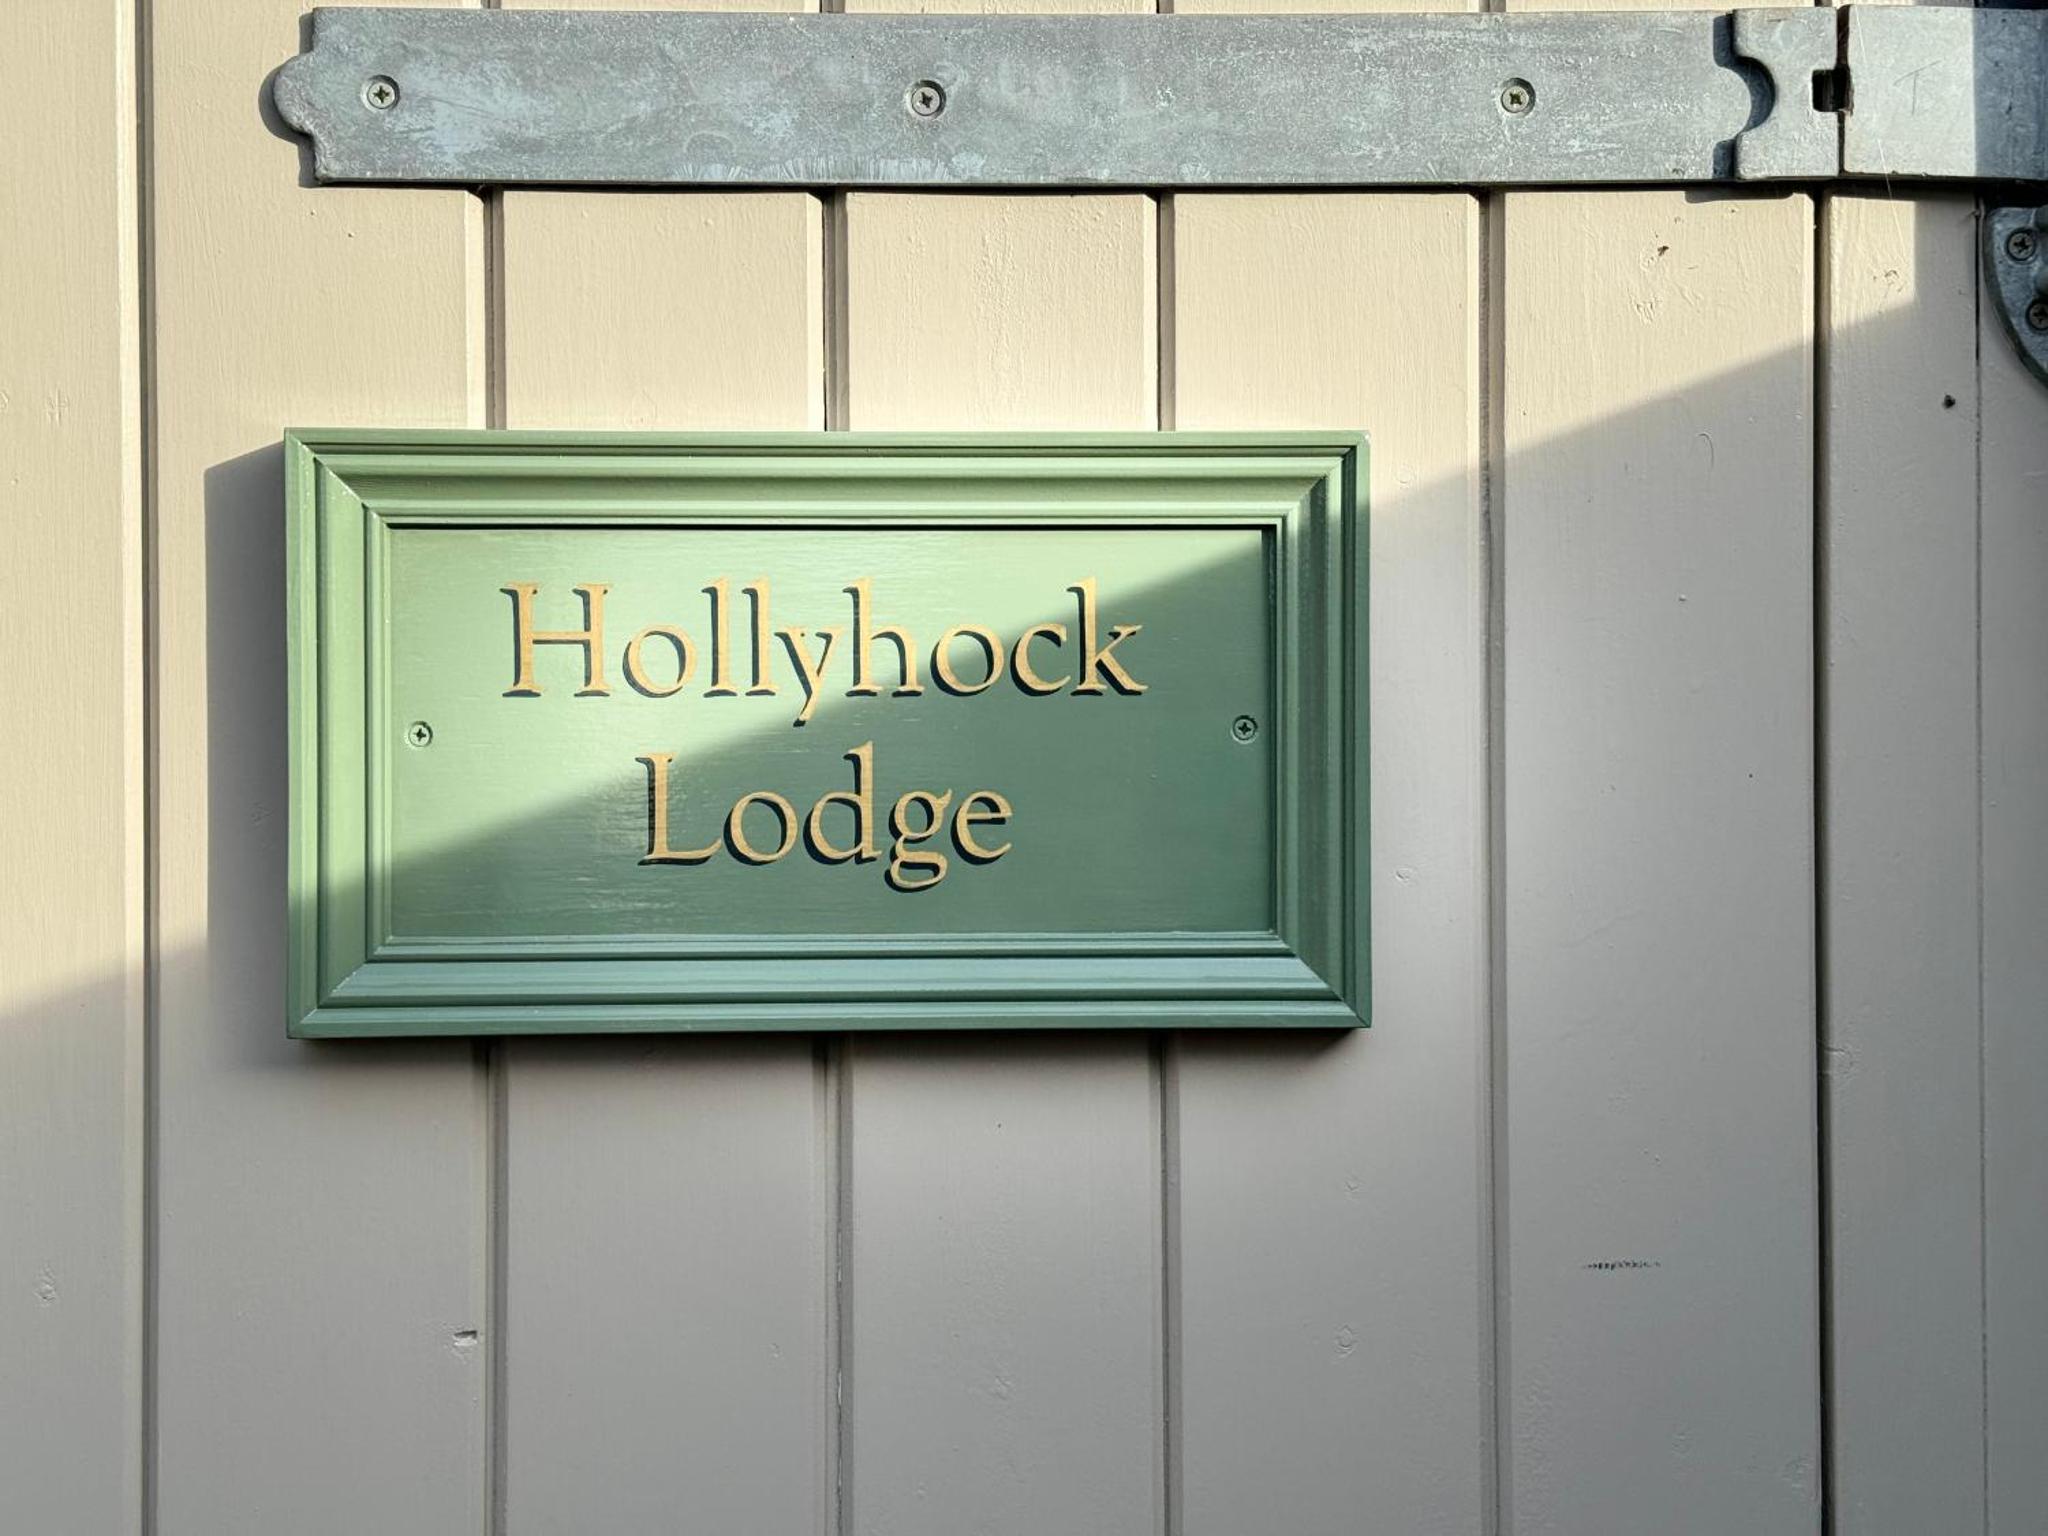 Hollyhock Lodge